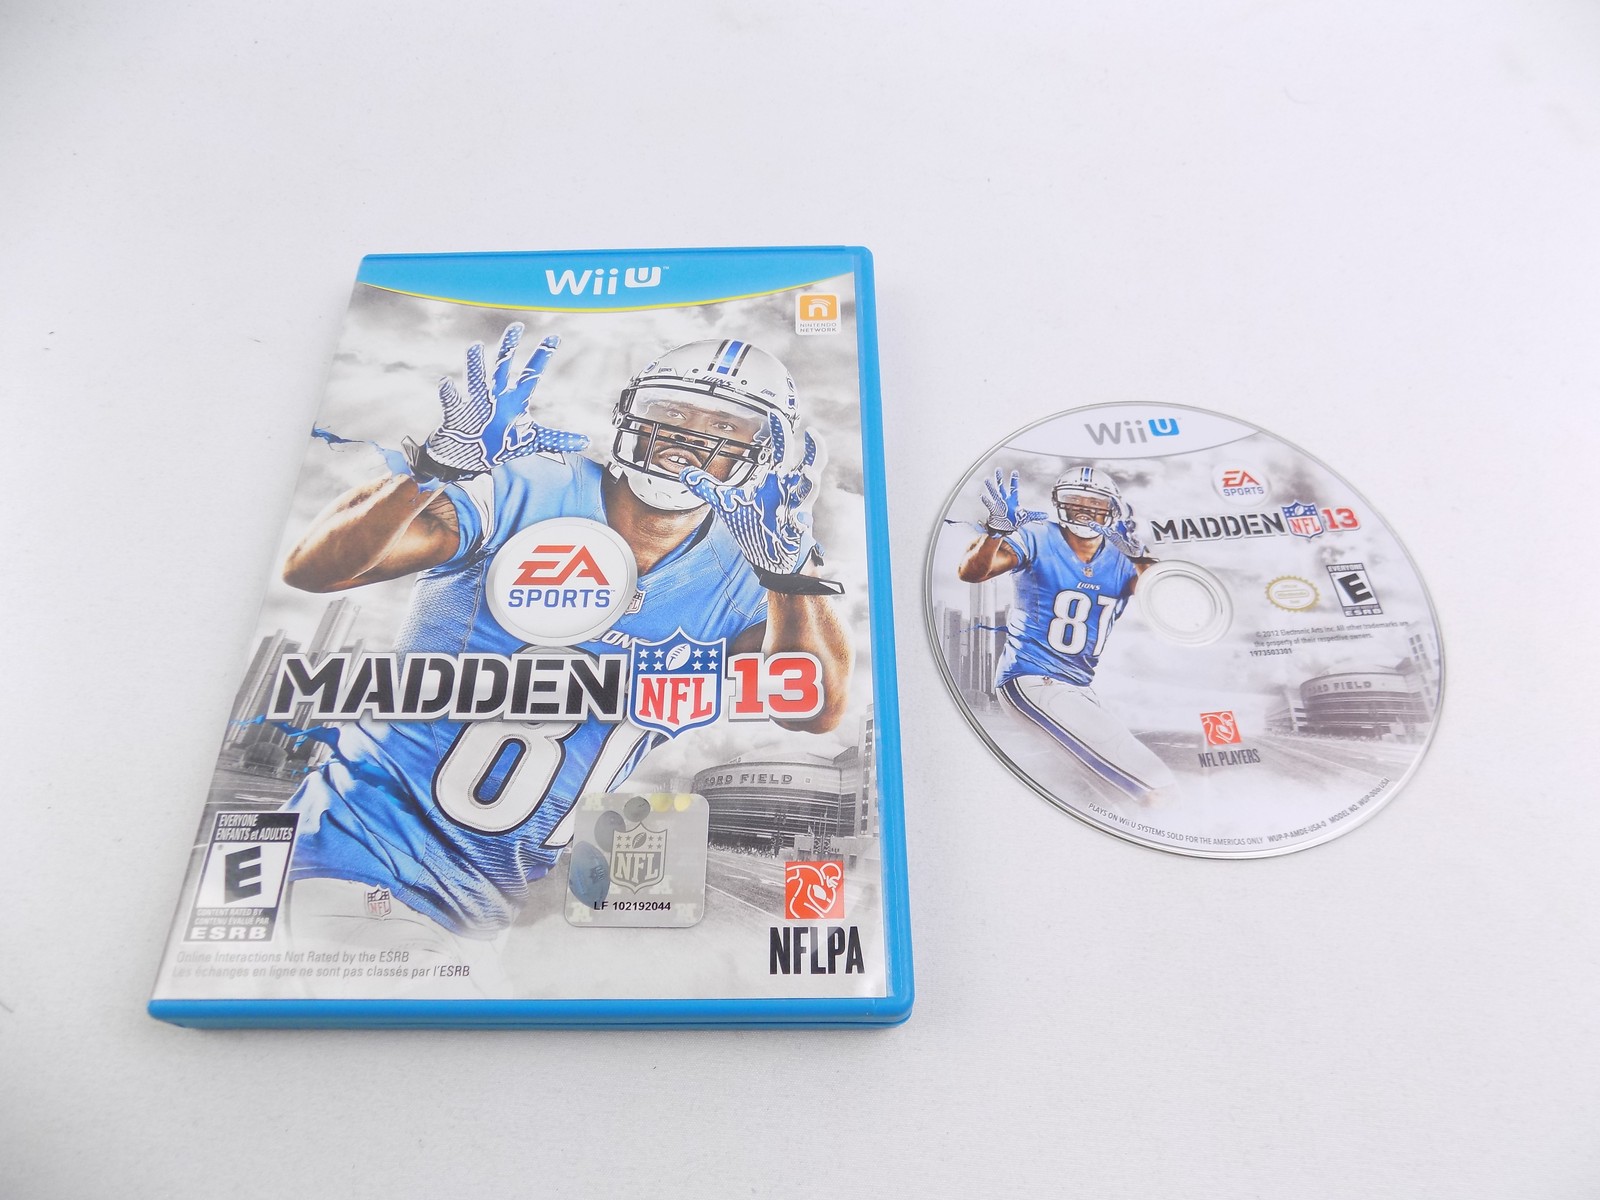 Nintendo Madden NFL 13 Games